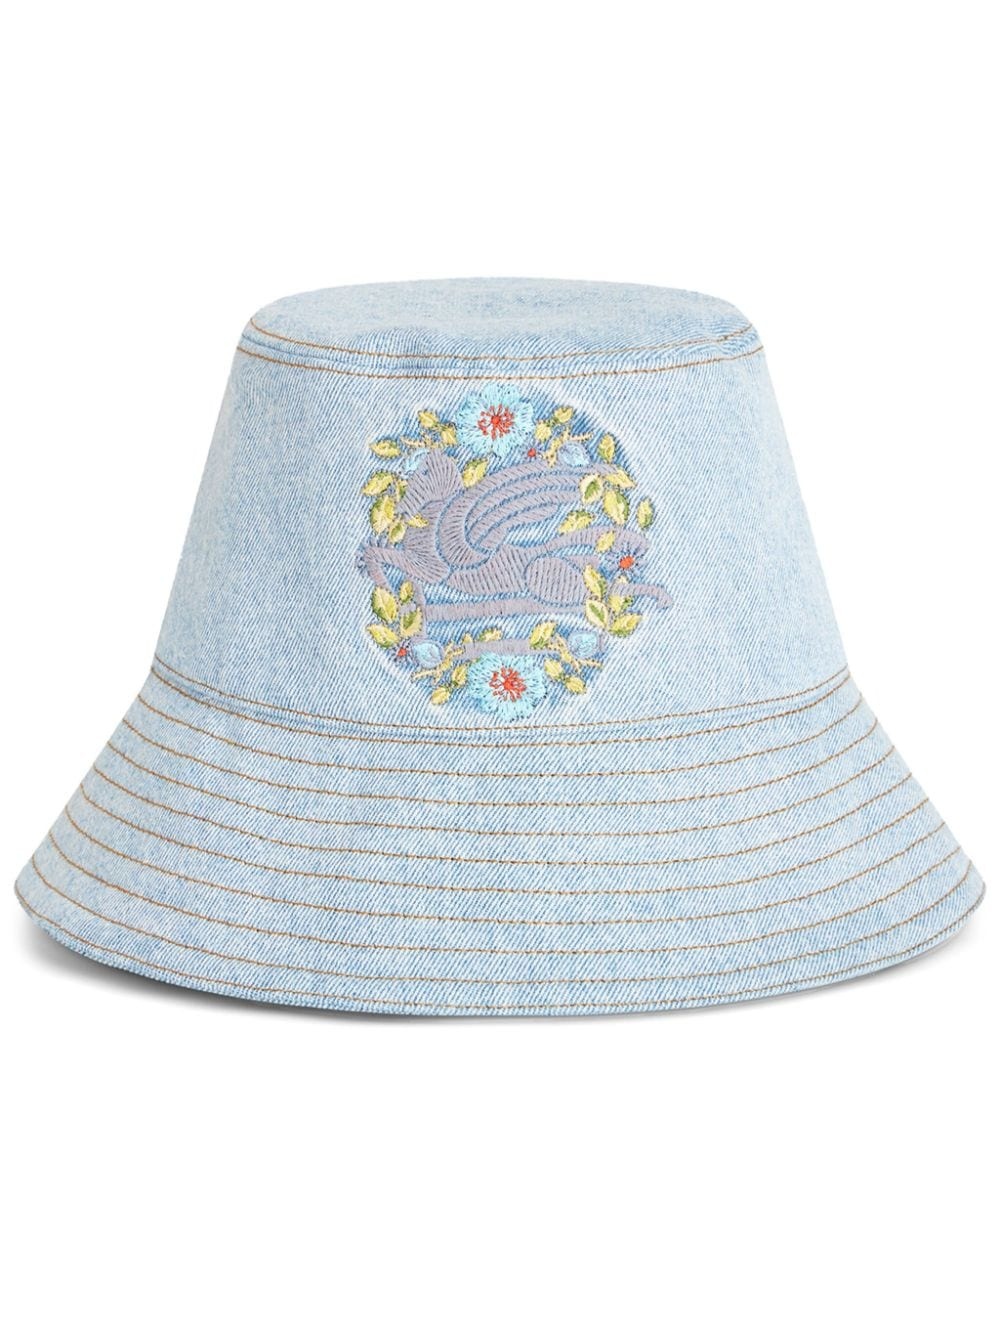 Pegaso embroidered denim bucket hat - 1